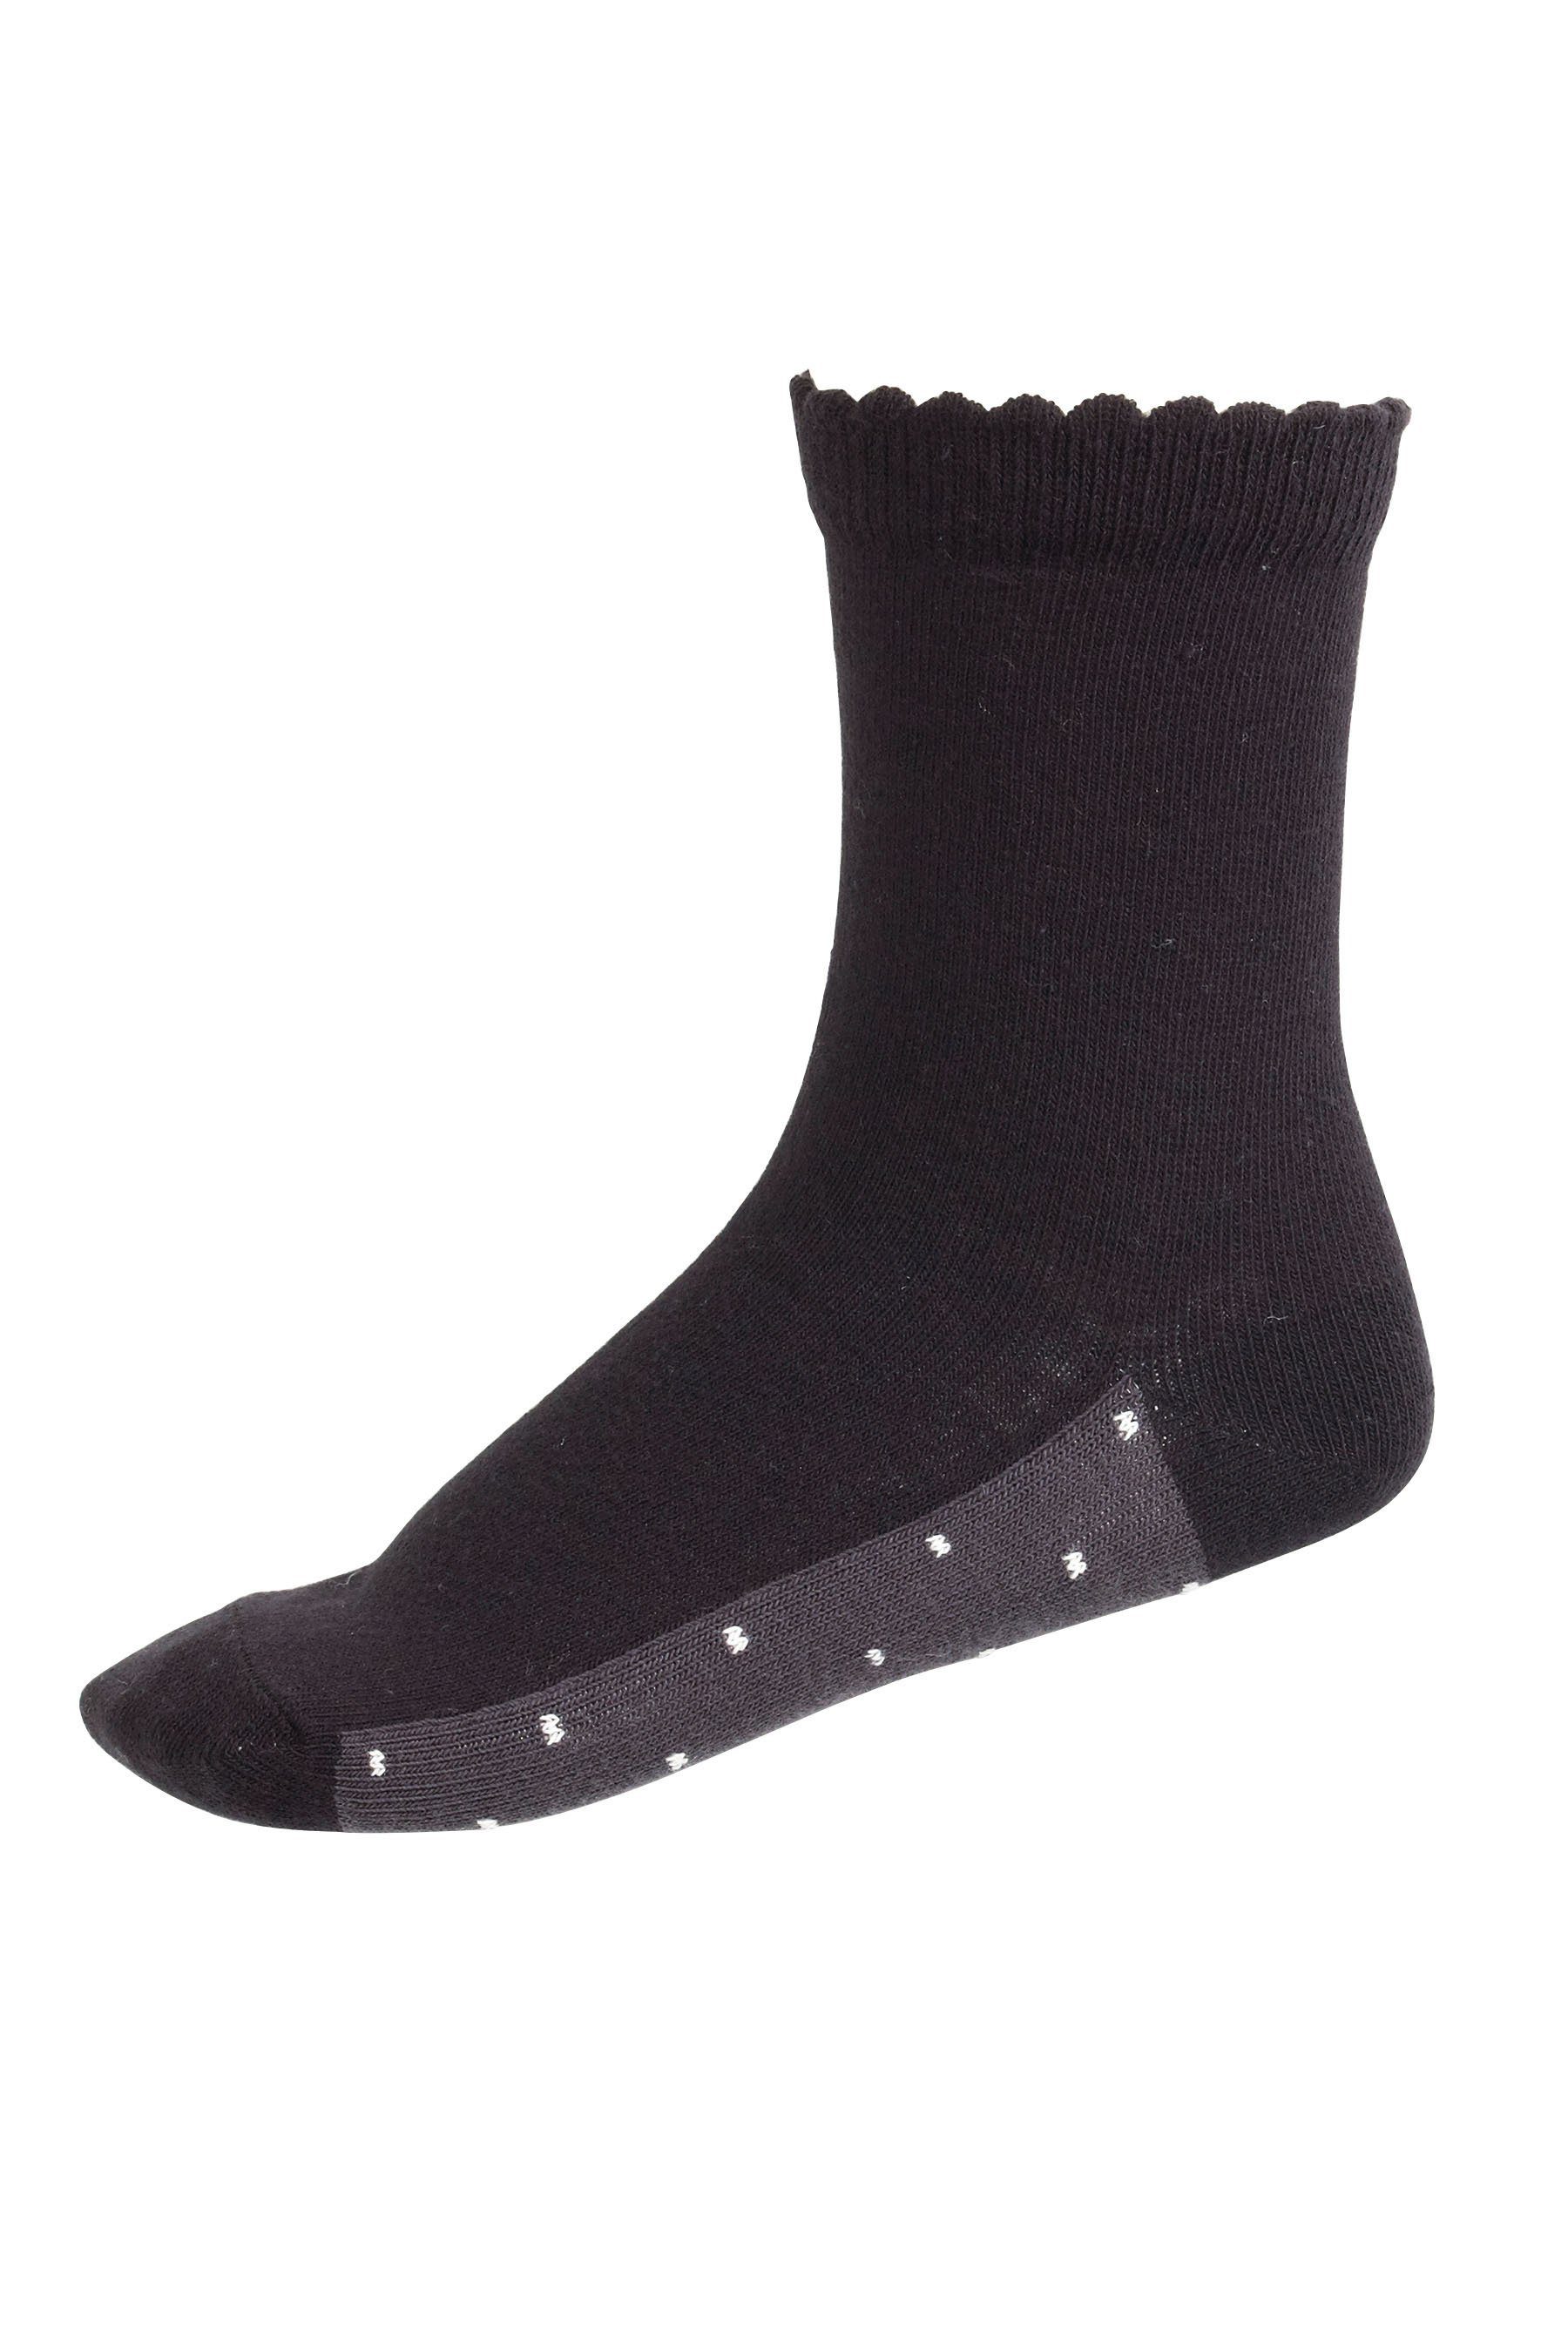 Wäsche/Bademode Socken Next Socken Socken mit Fußbett, 5er-Pack (5-Paar)